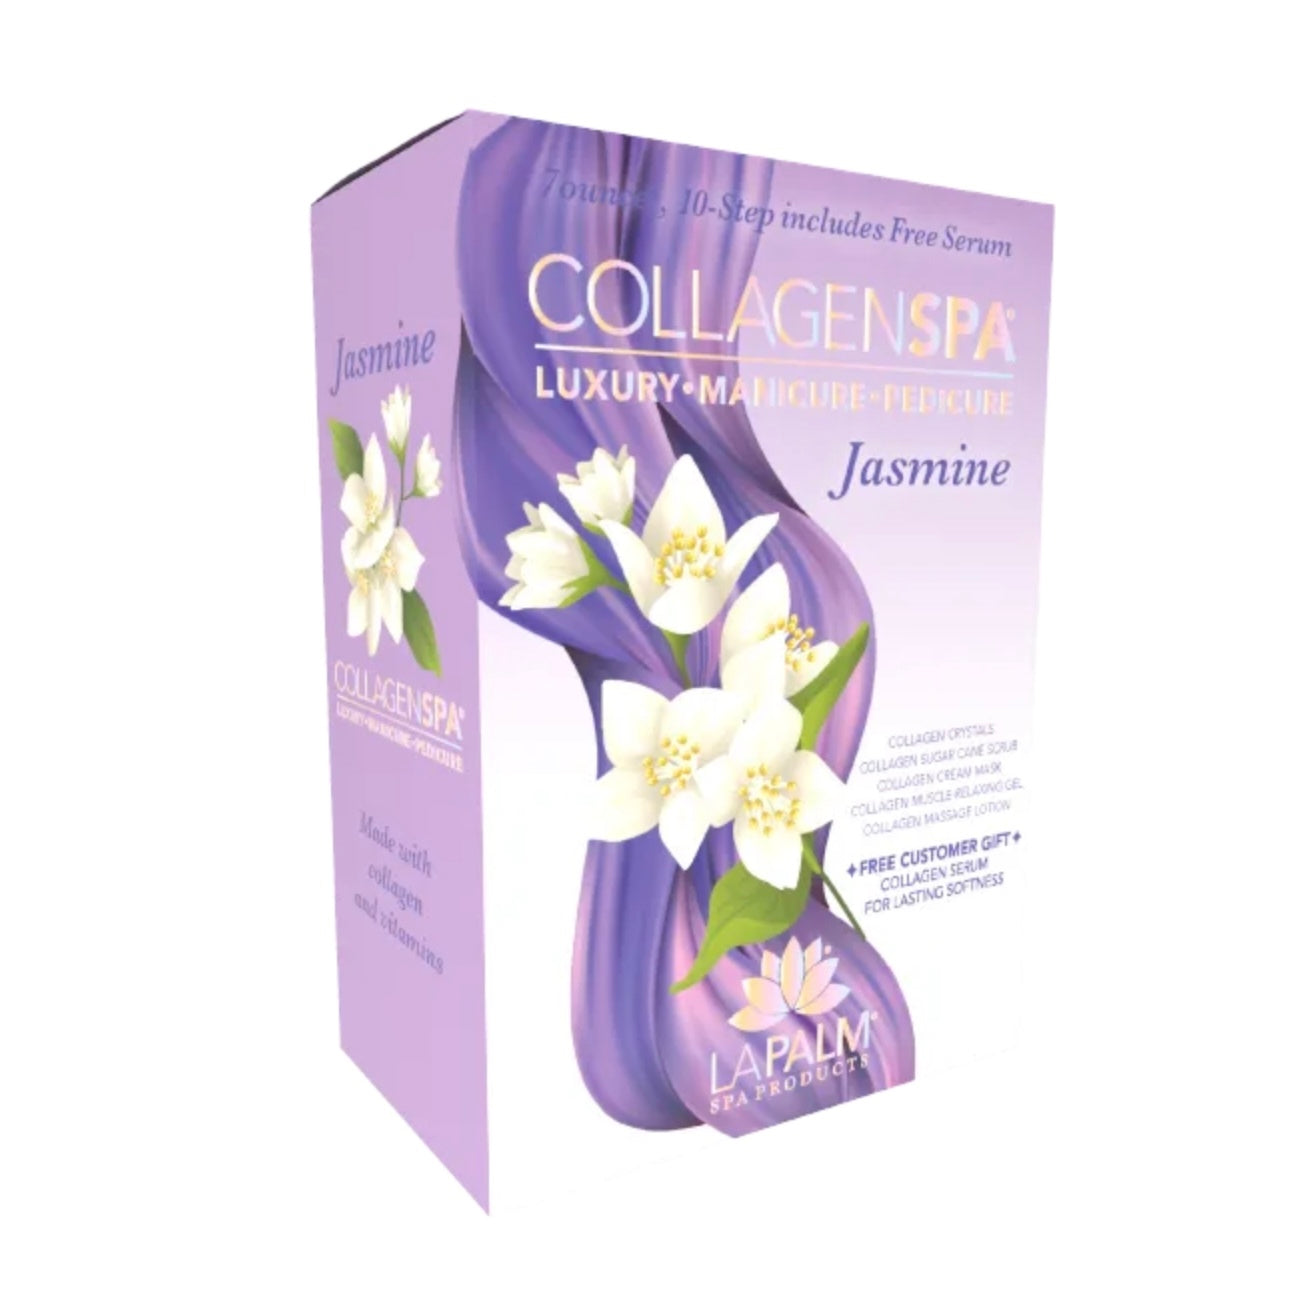 LaPalm Collagen Spa: Step Kit - Jasmine